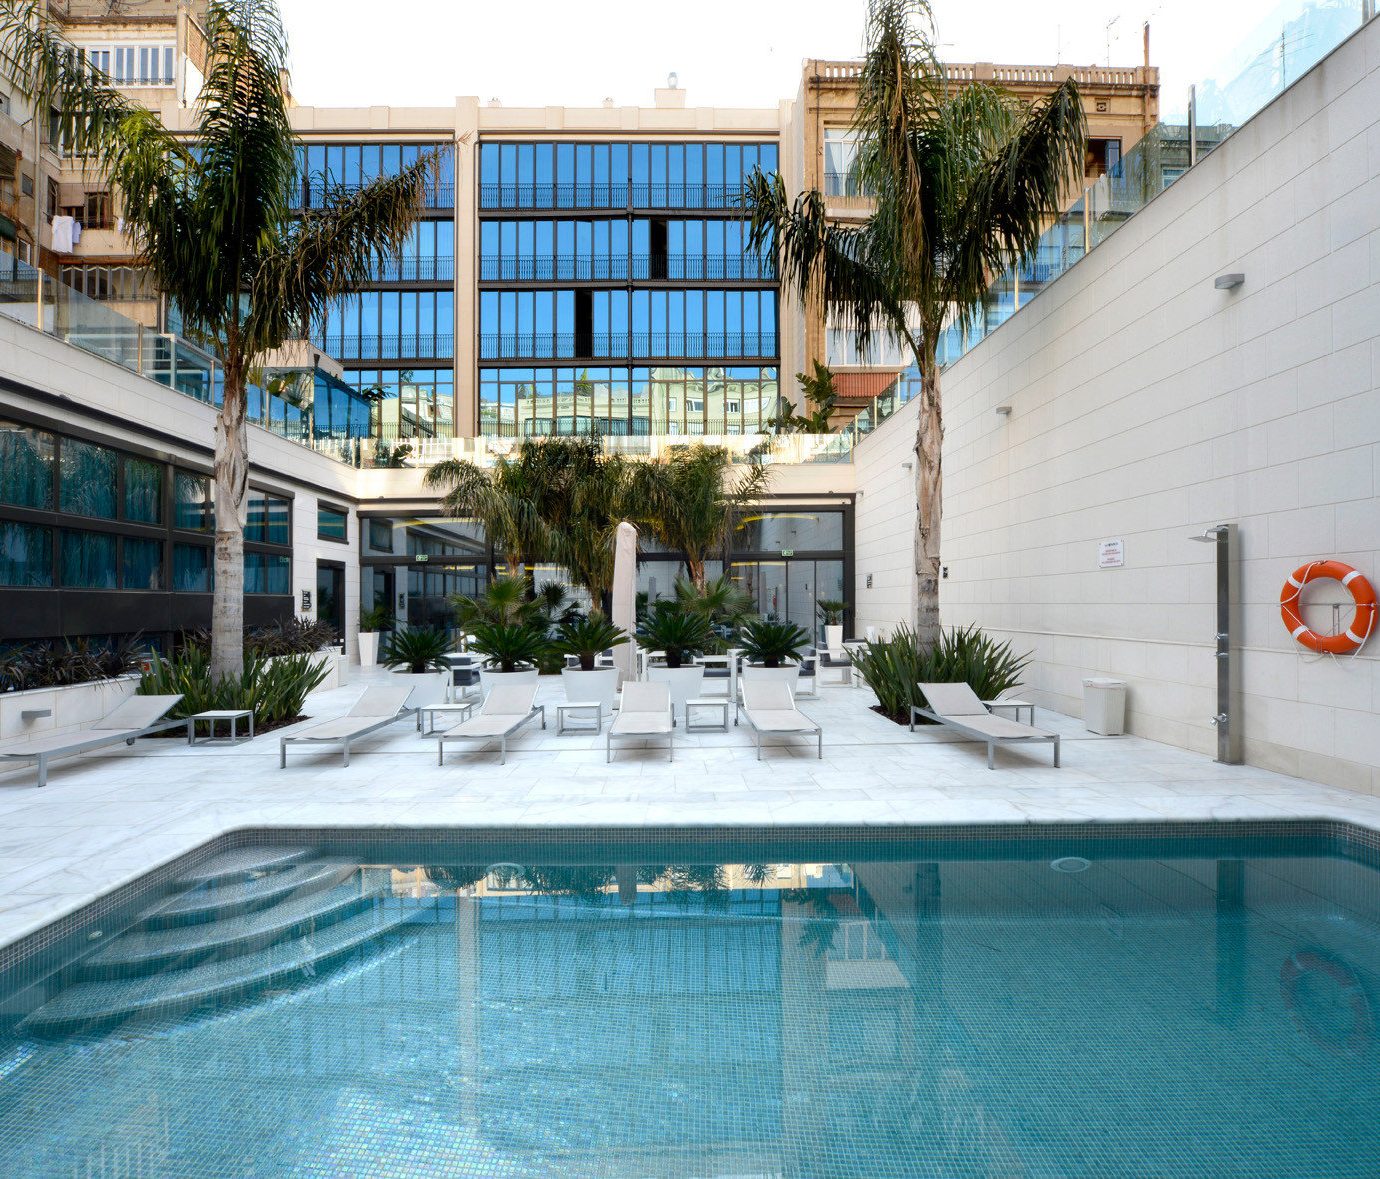 building swimming pool property condominium Courtyard backyard home Resort Villa mansion blue